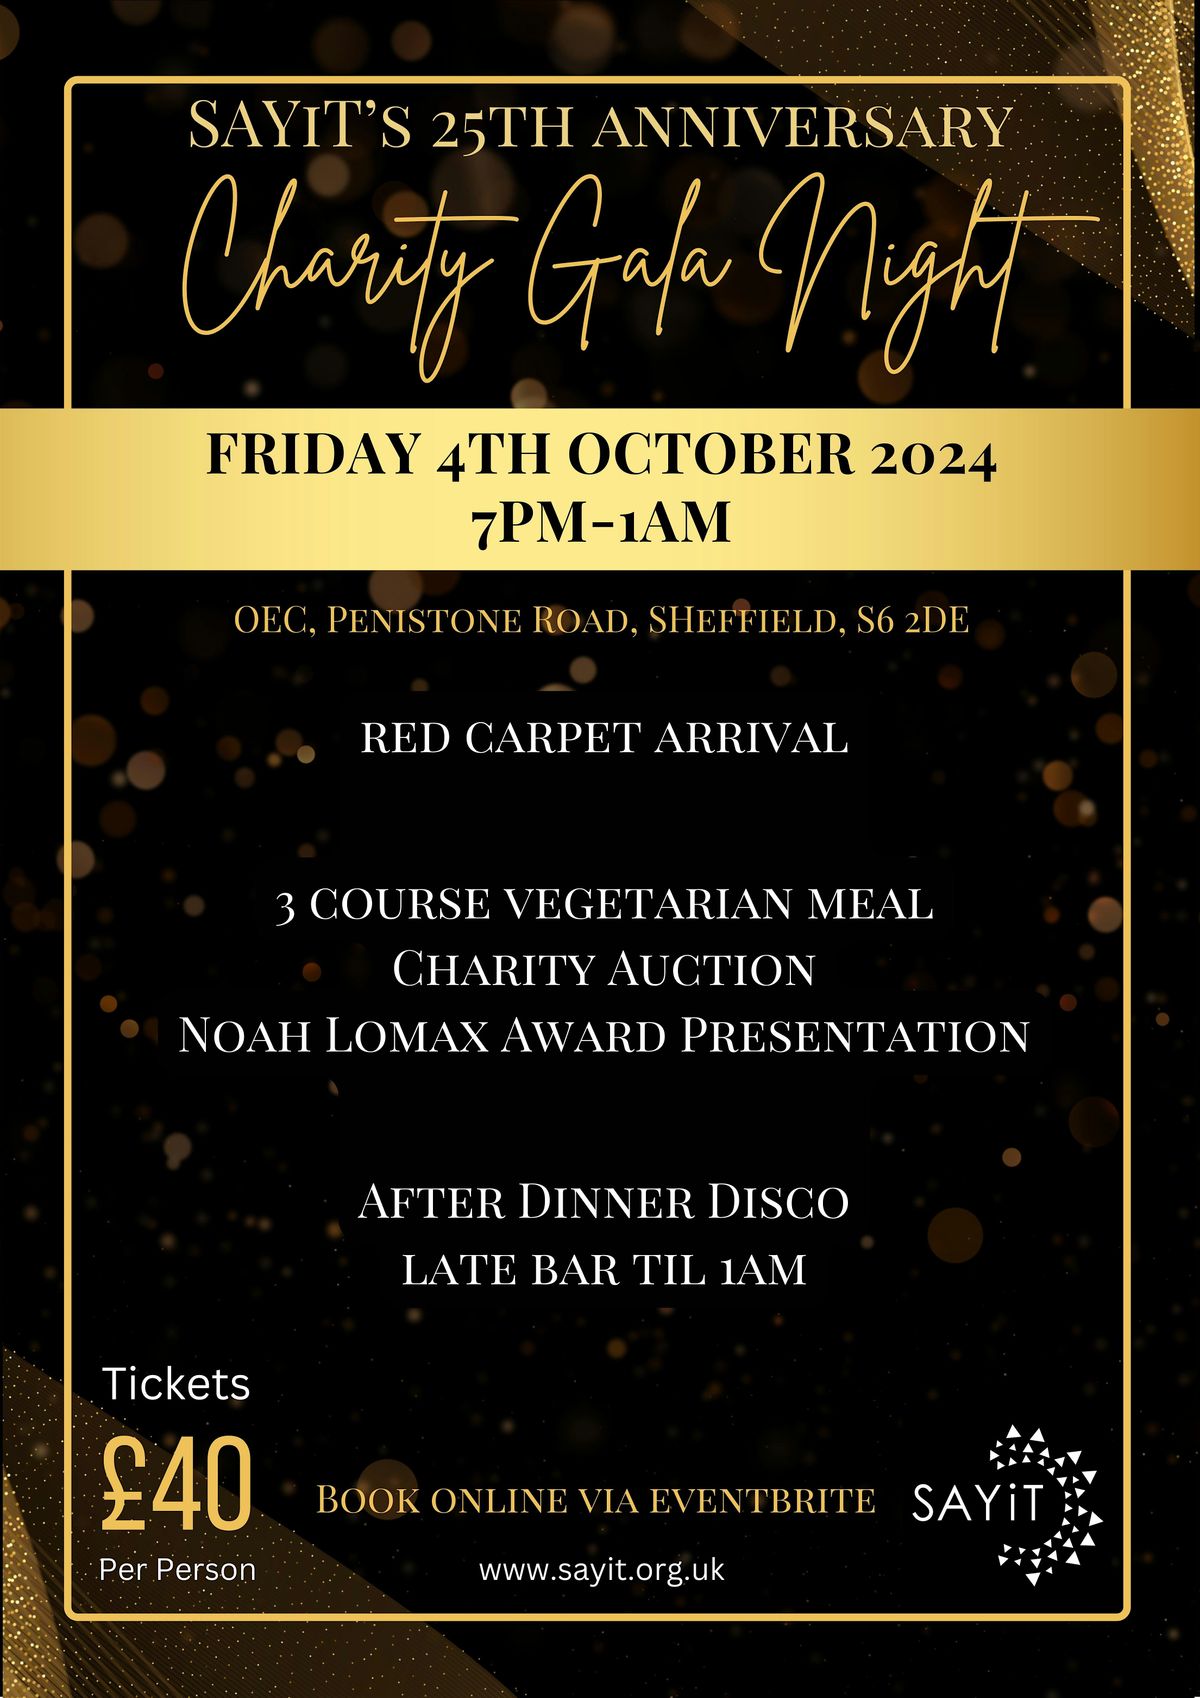 SAYiT's 25th Anniversary Charity Gala Night